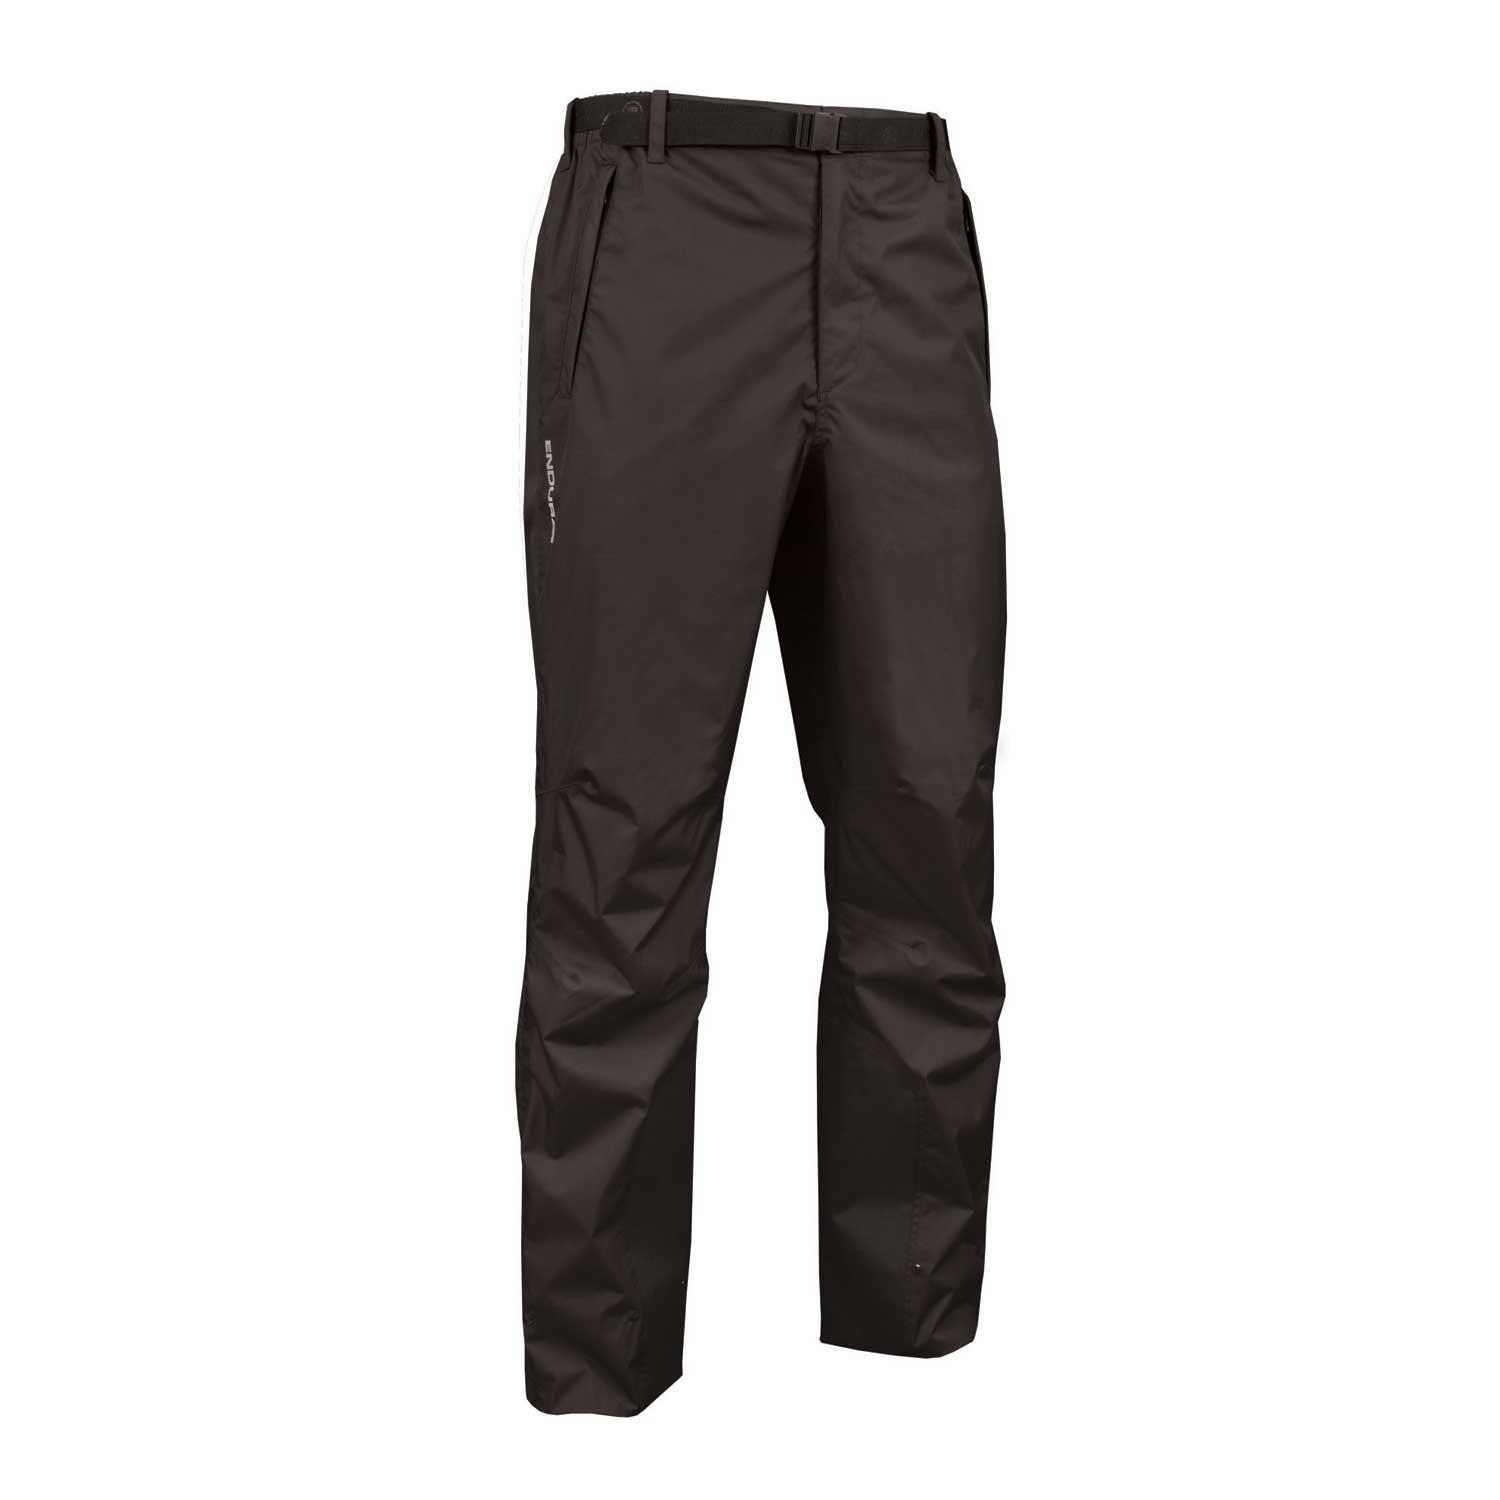 Endura MT500 waterproof Pants II  black  Men long  Pants  Bike Clothing   nanobike